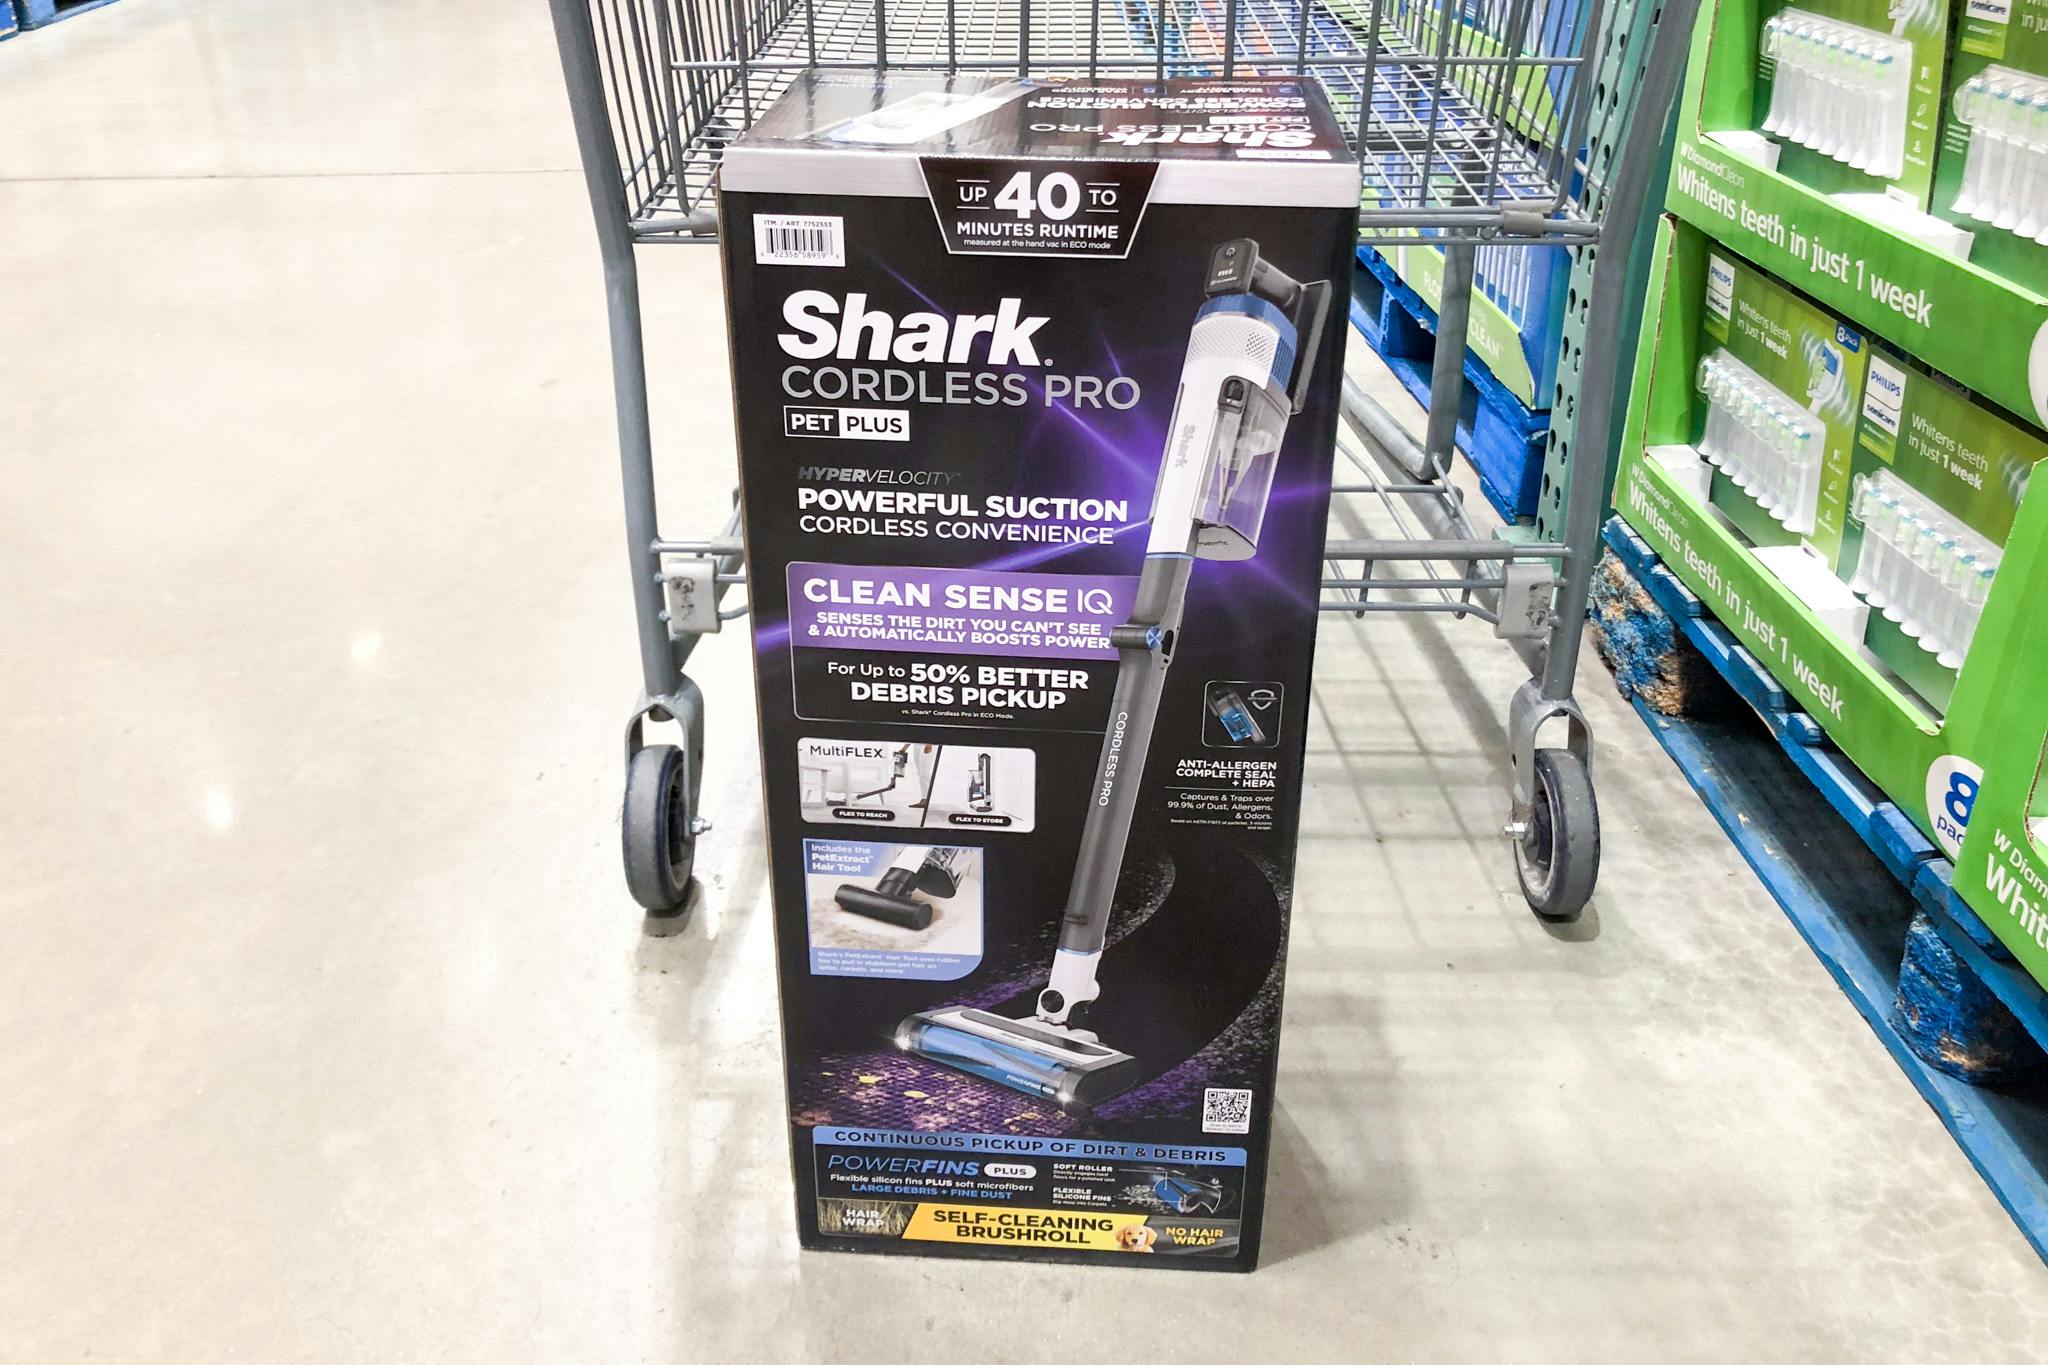 Shark Cordless Pro Bagless Stick Vacuum with Clean Sense IQ, Odor